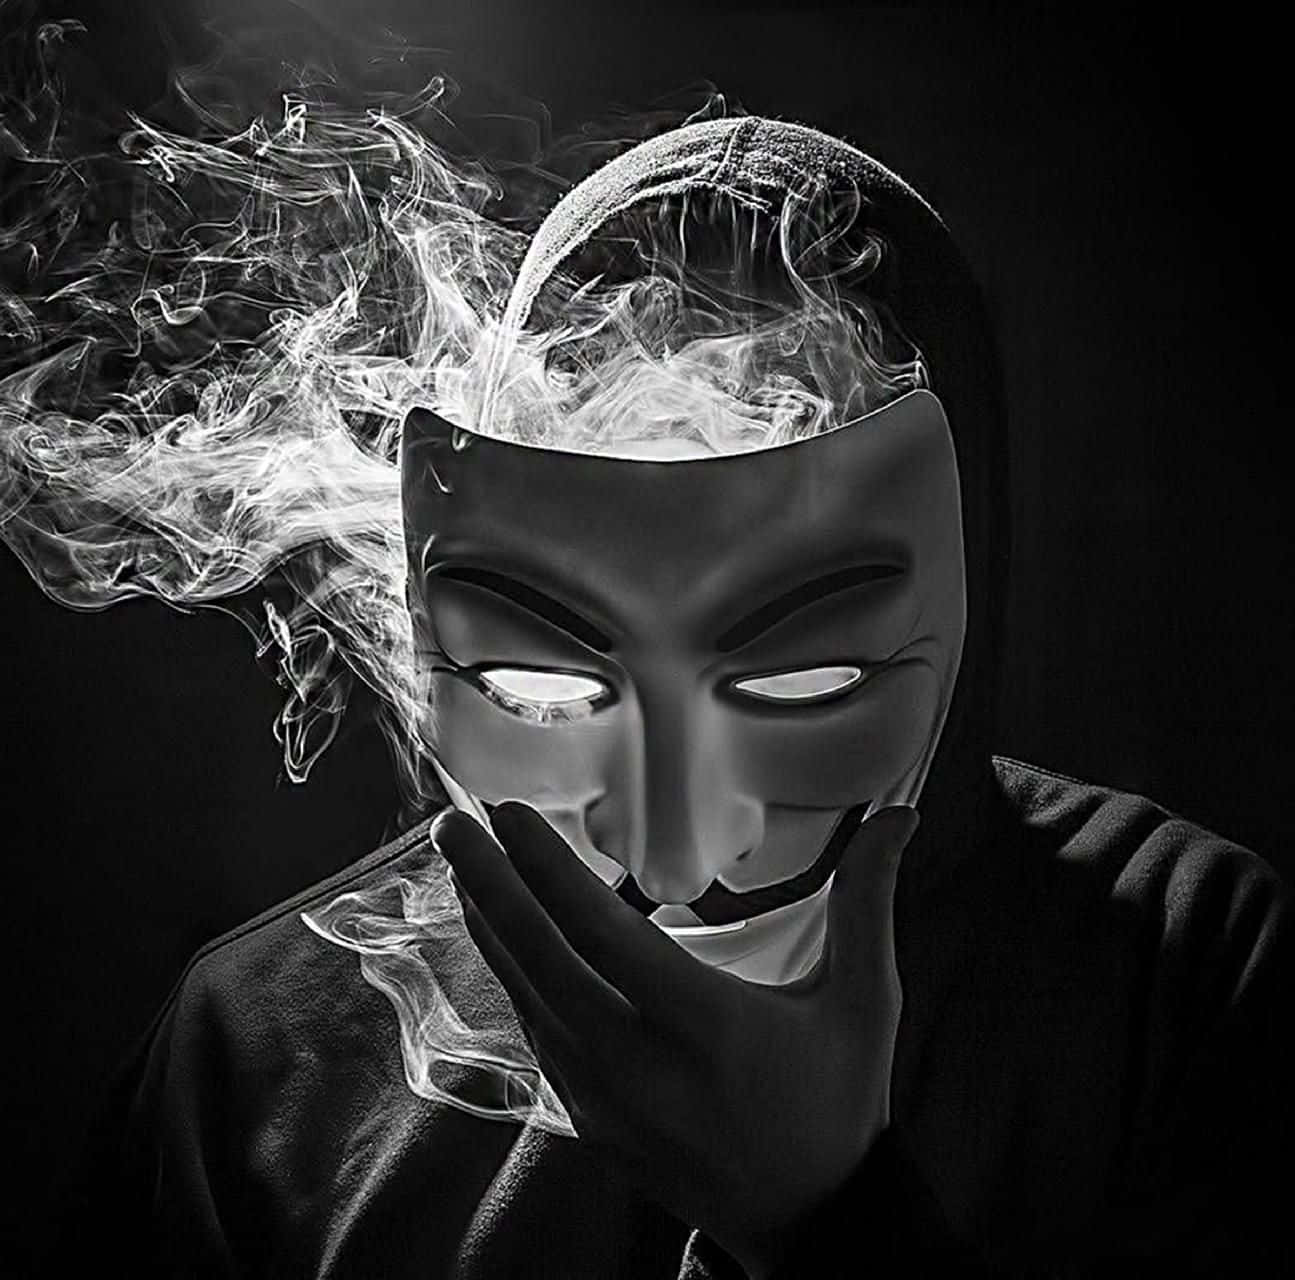 anonymous hacker wallpaper